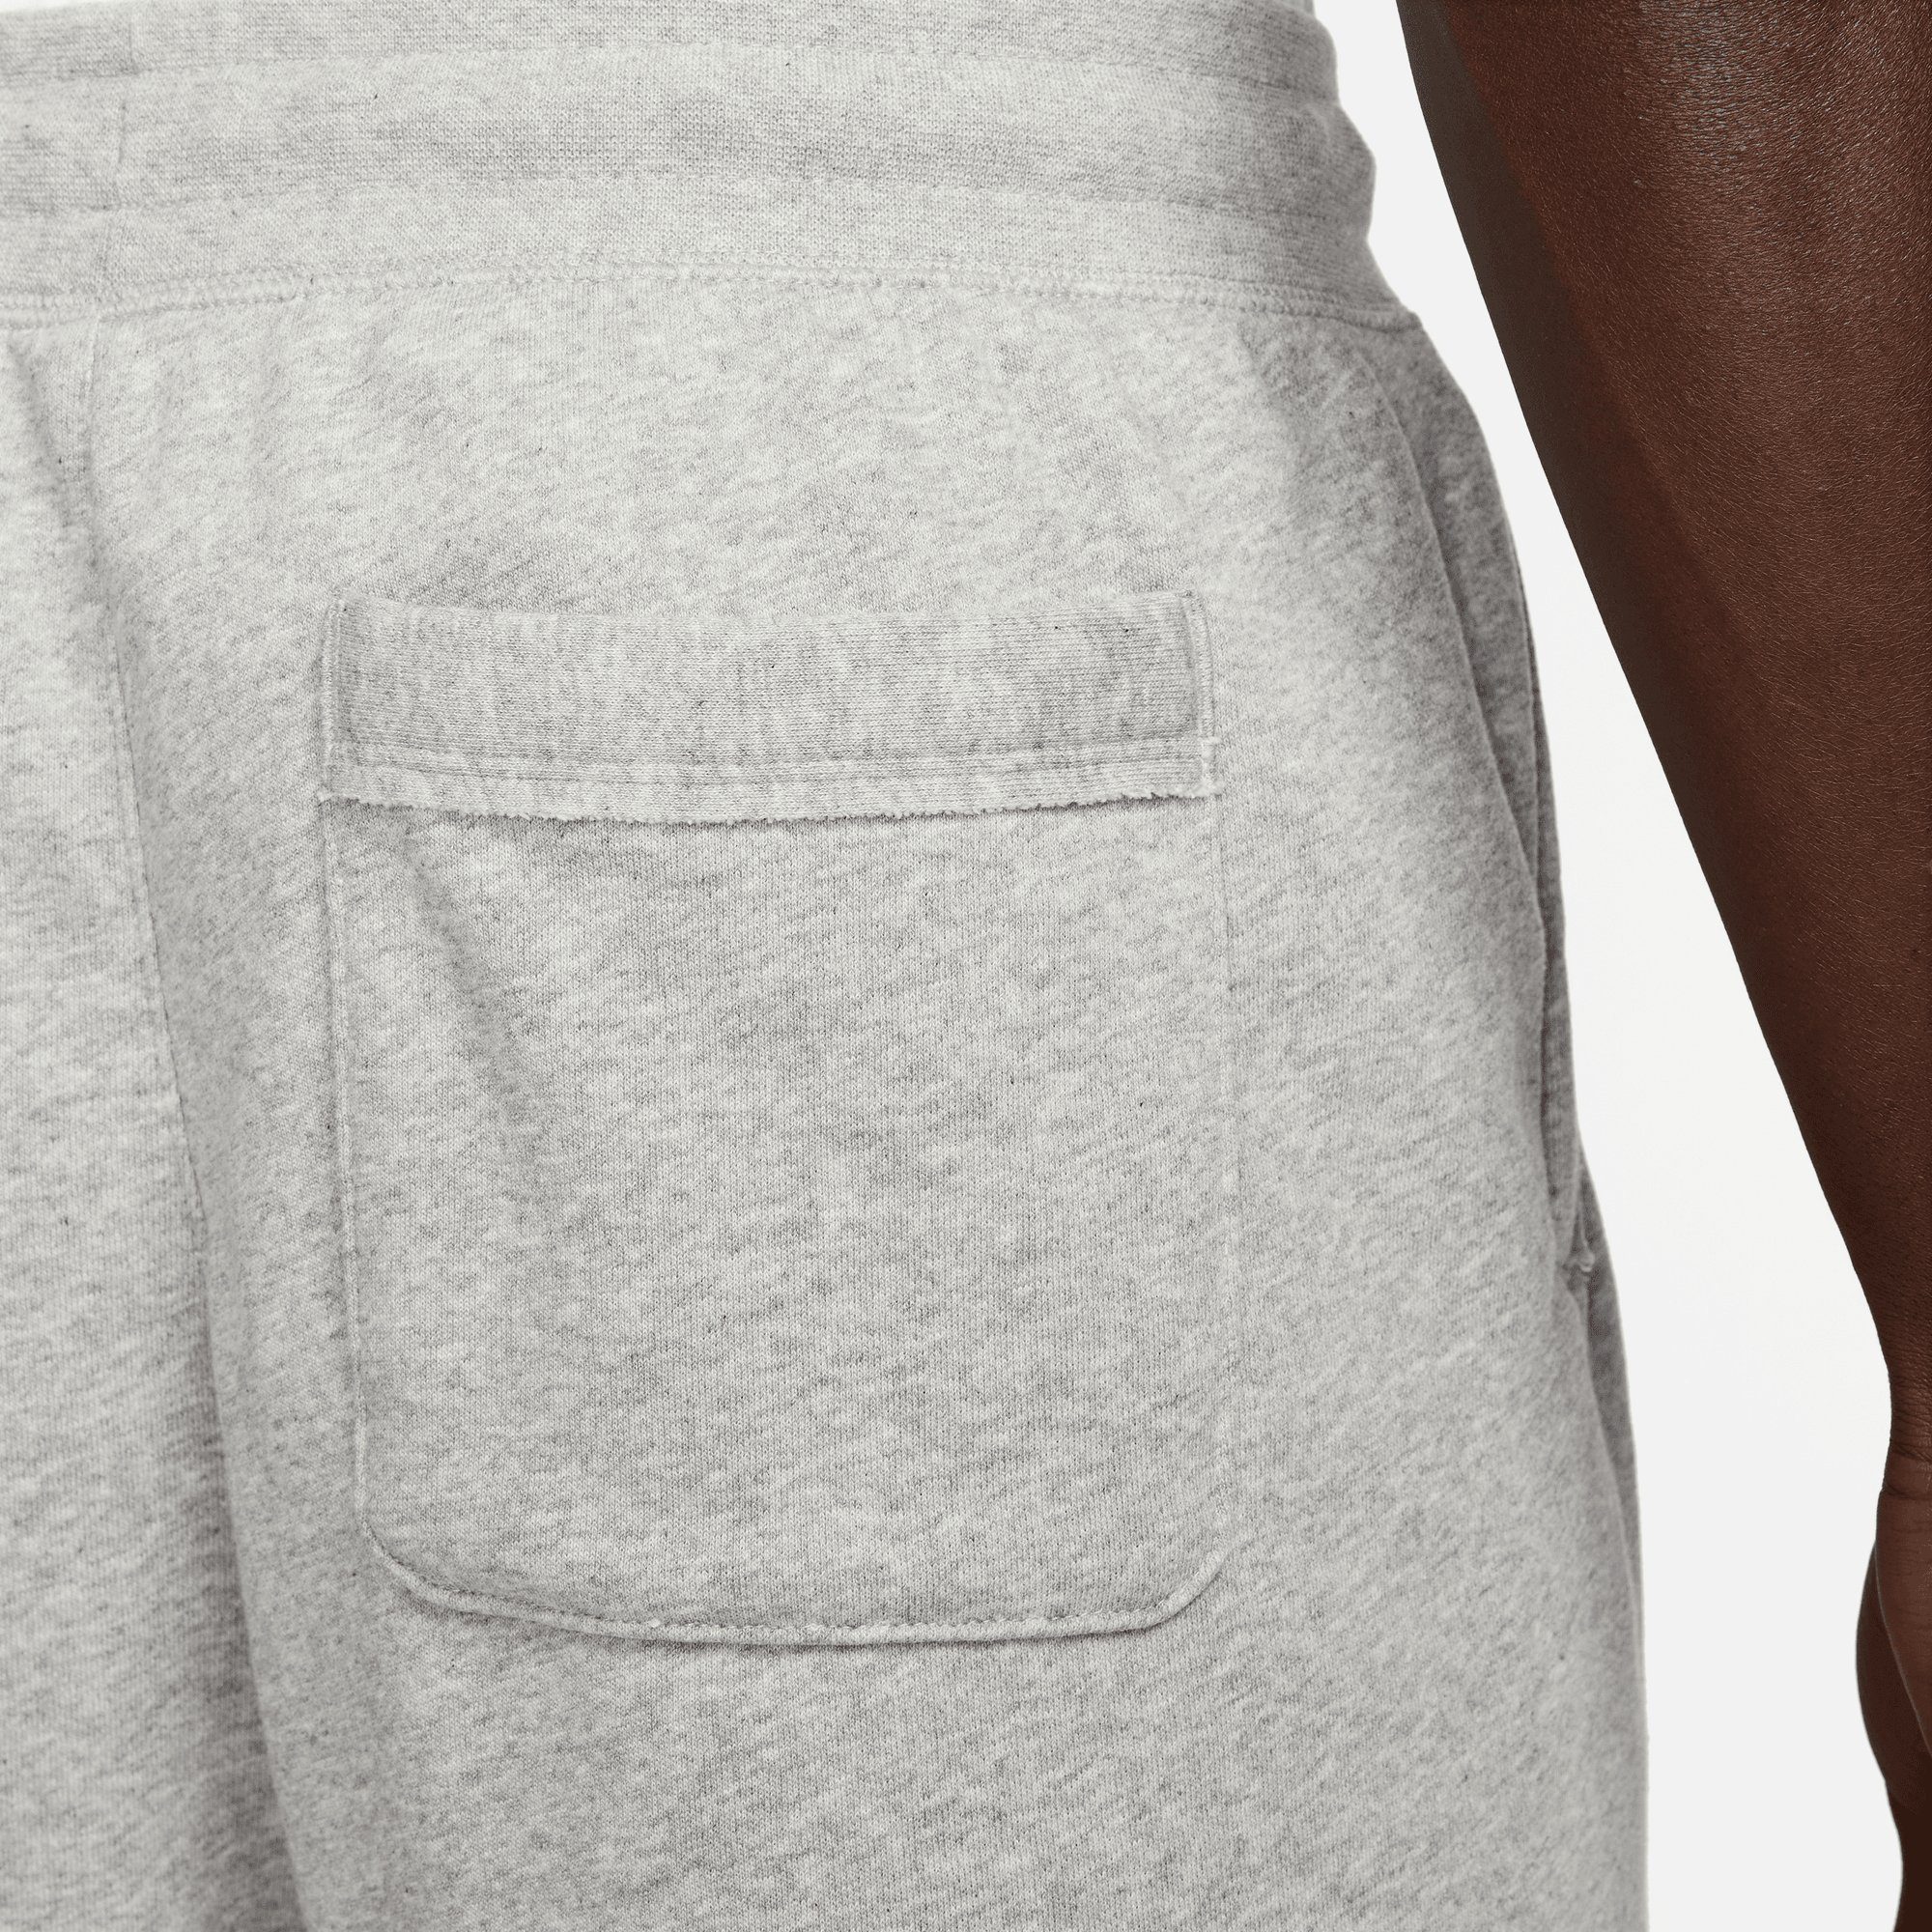 SHORTS GREY ALUMNI Sportswear CLUB FLEECE TERRY Shorts FRENCH MEN'S Nike HEATHER/WHITE/WHITE DK